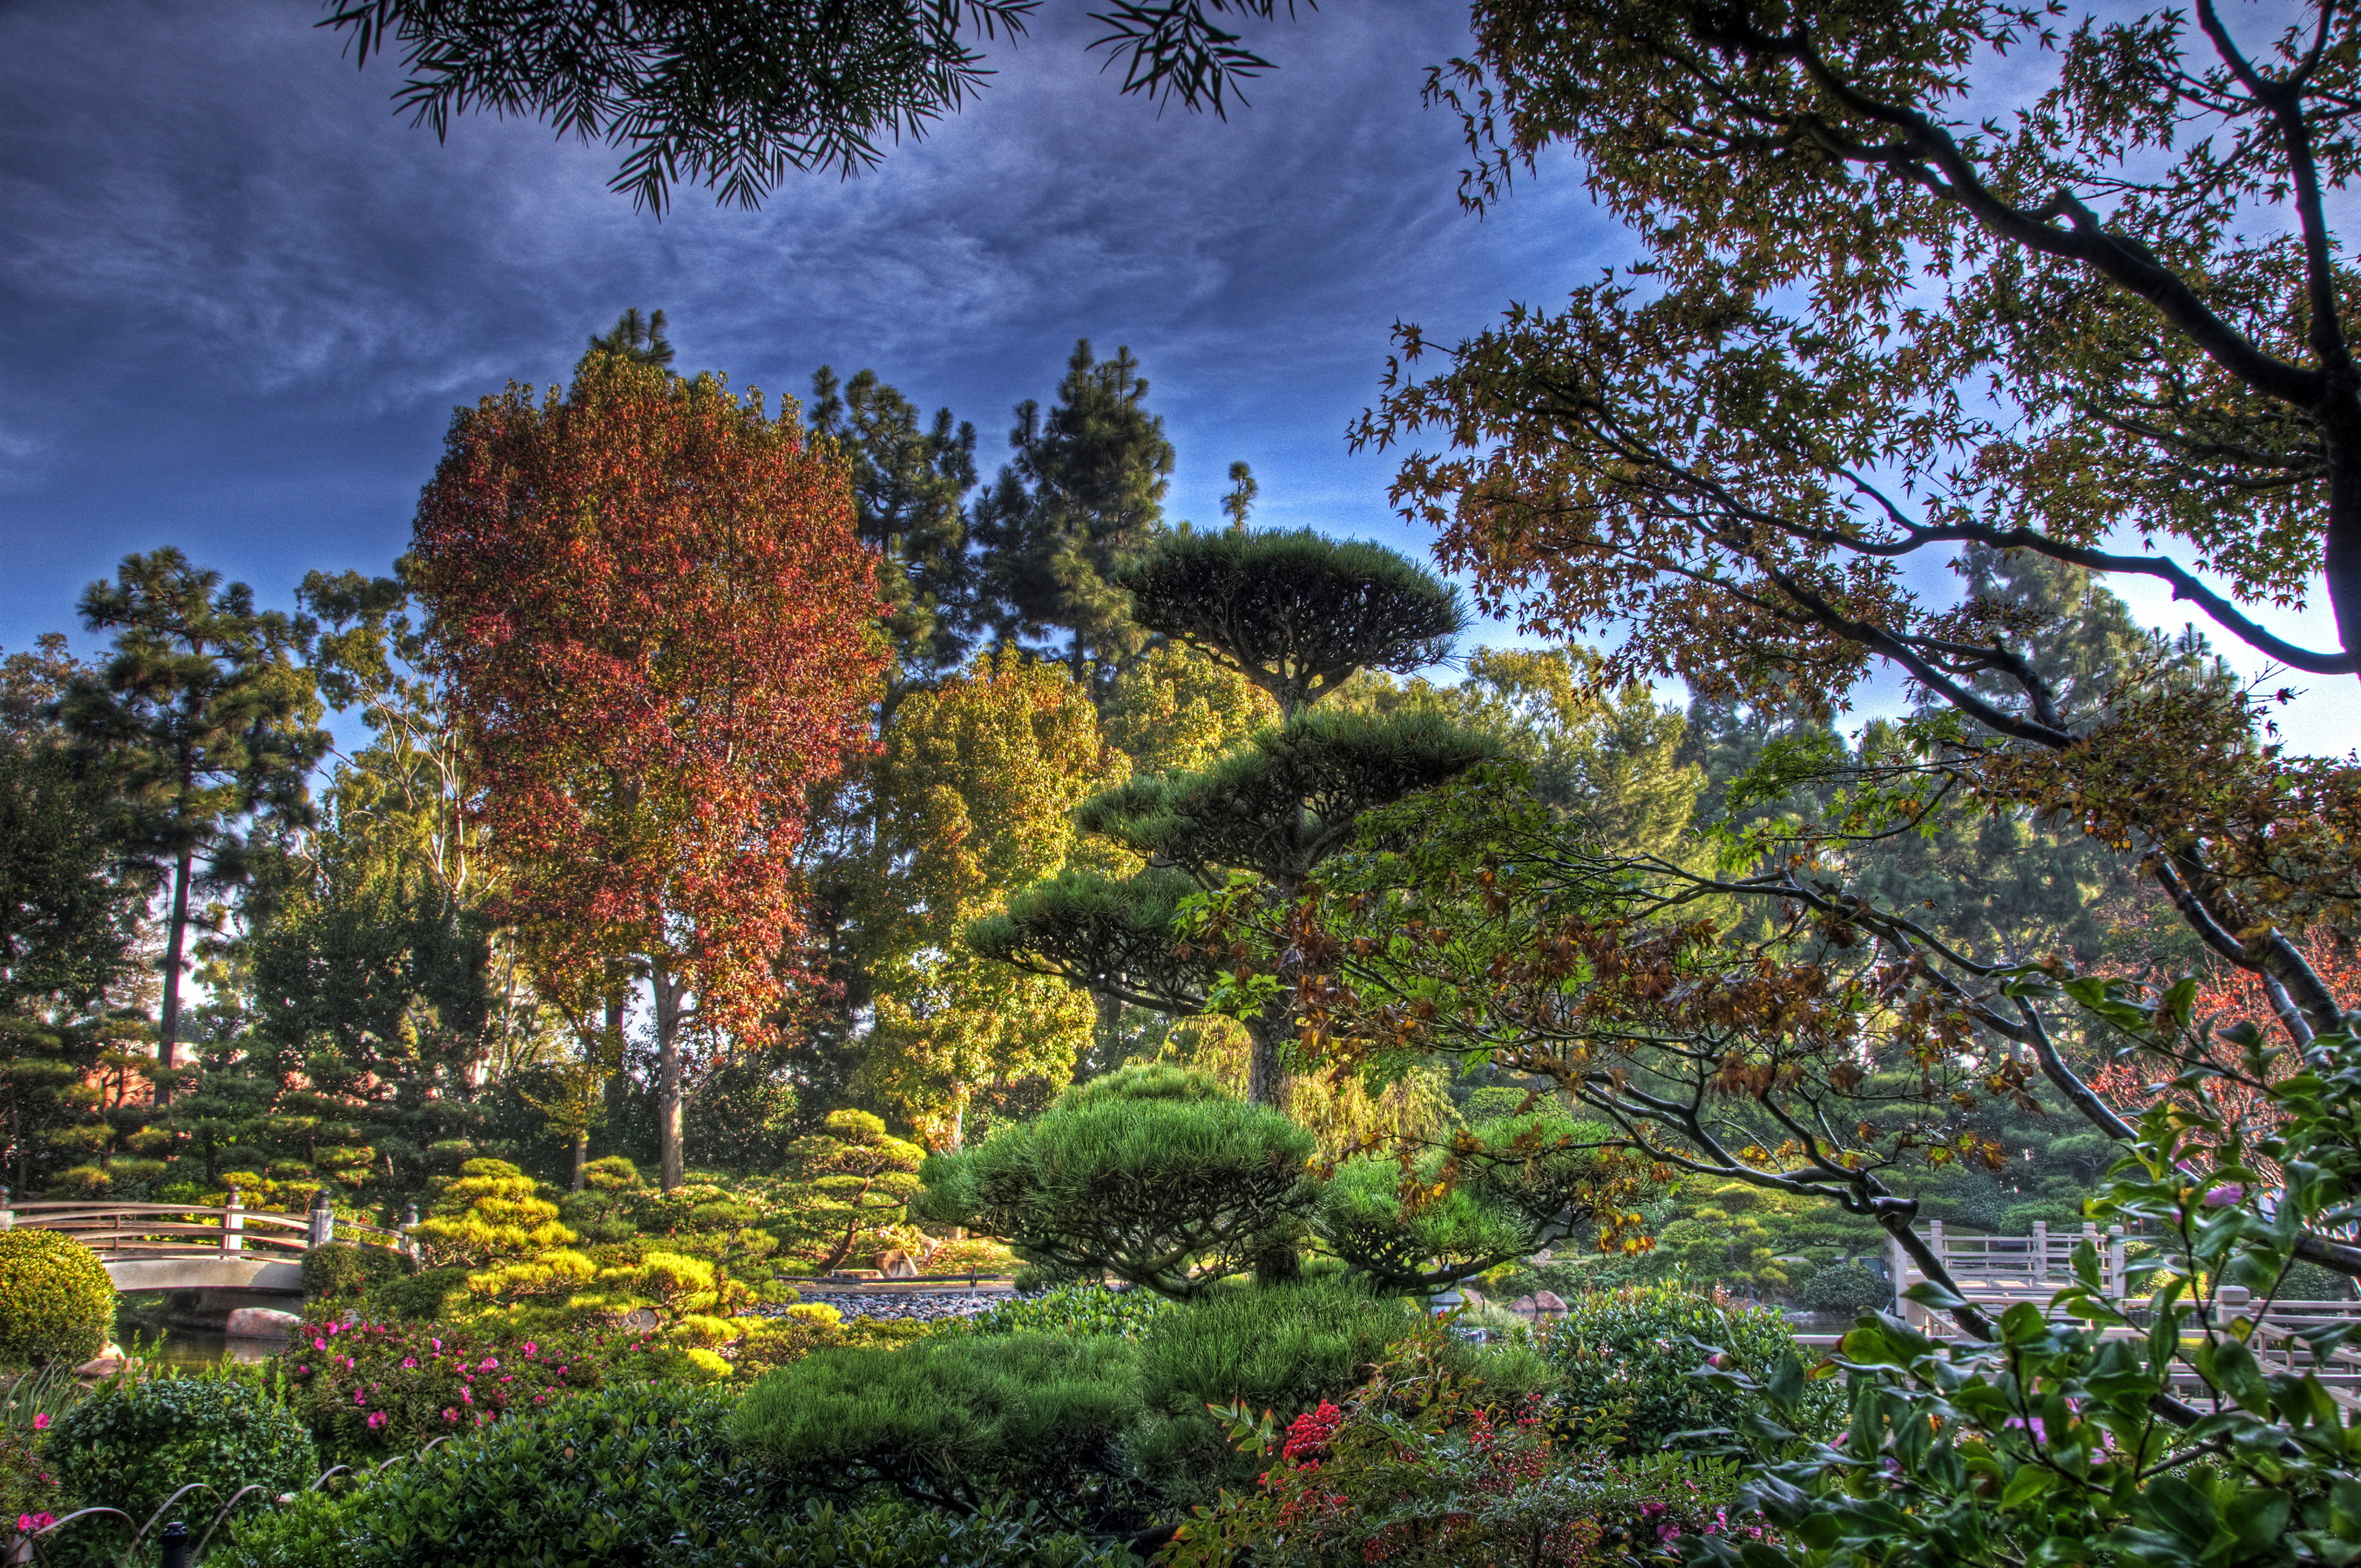 There are trees in the garden. Ботанический сад Киото. Японский сад Эрл Бернс Миллер. Парк Дендрарий. Деревья в саду.